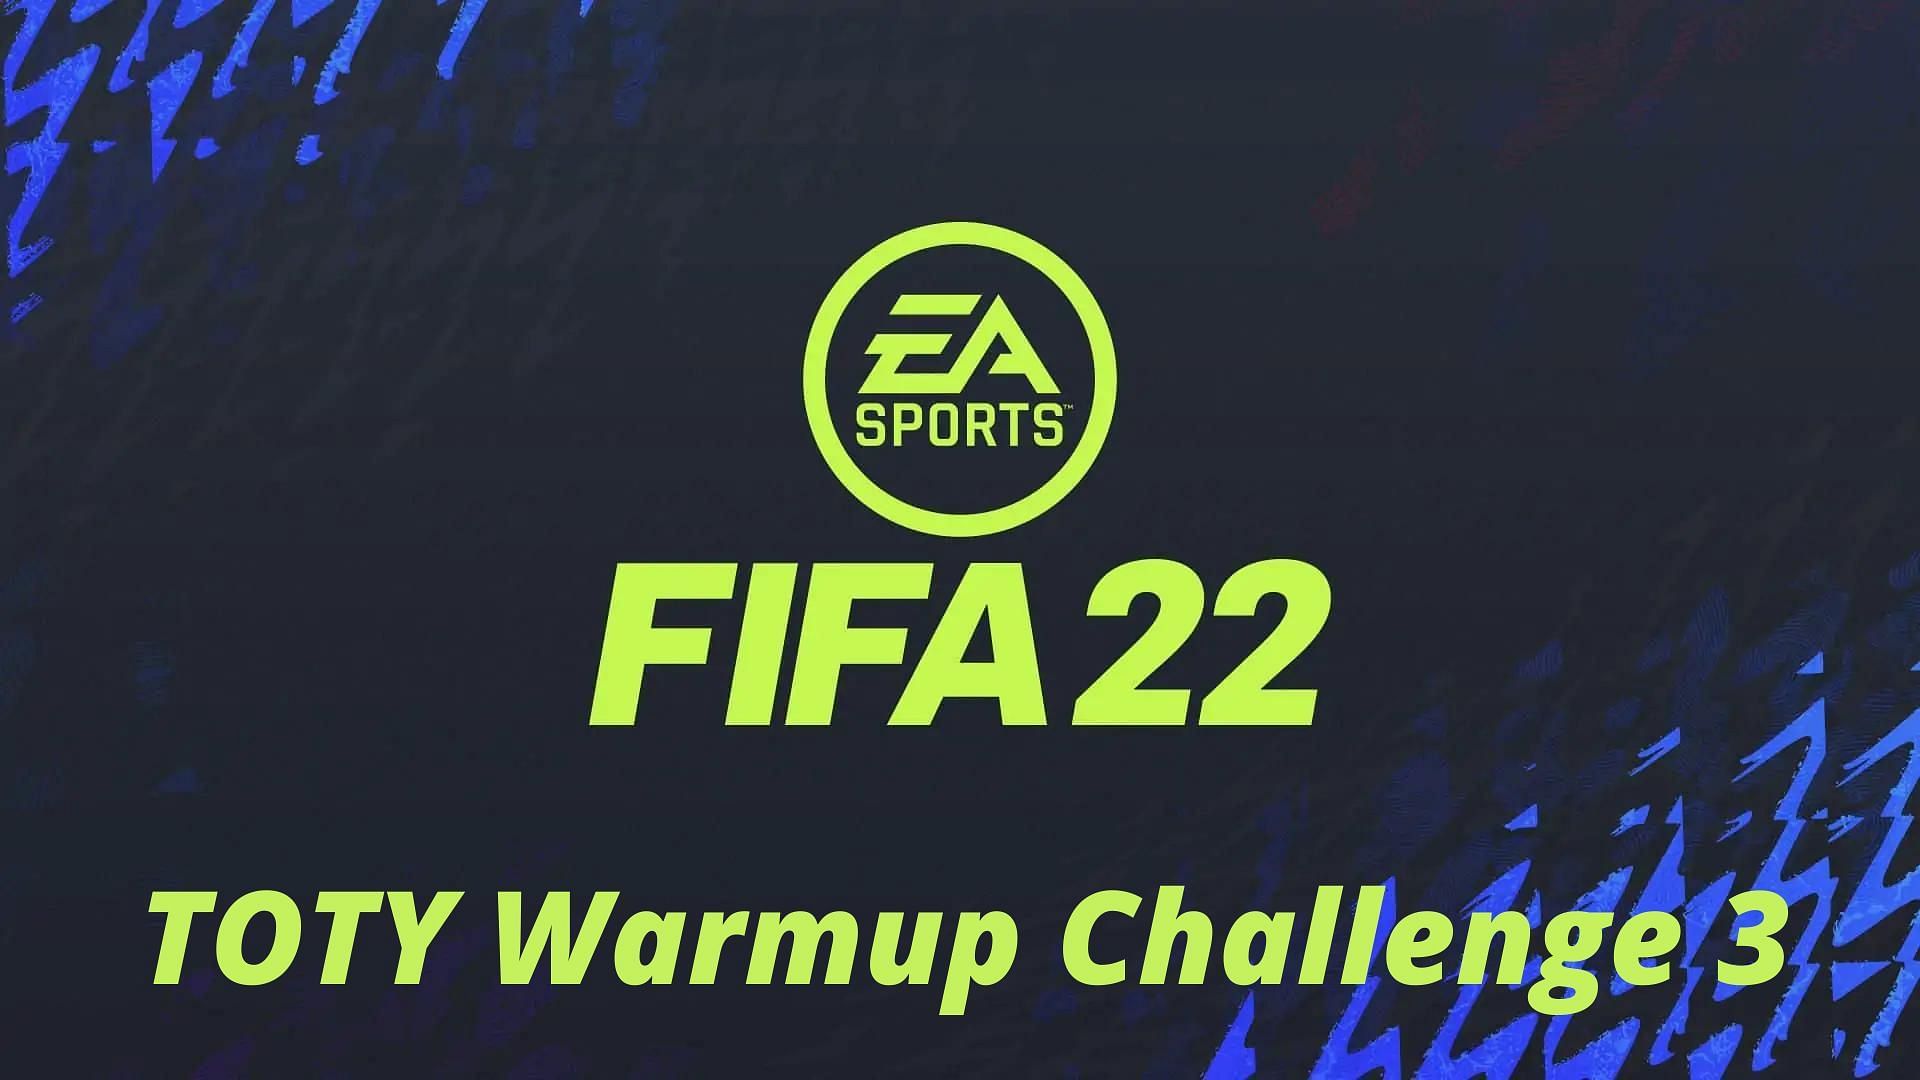 TOTY Warmup Challenge 3 SBC is live in FIFA 22 (Image via Sportskeeda)